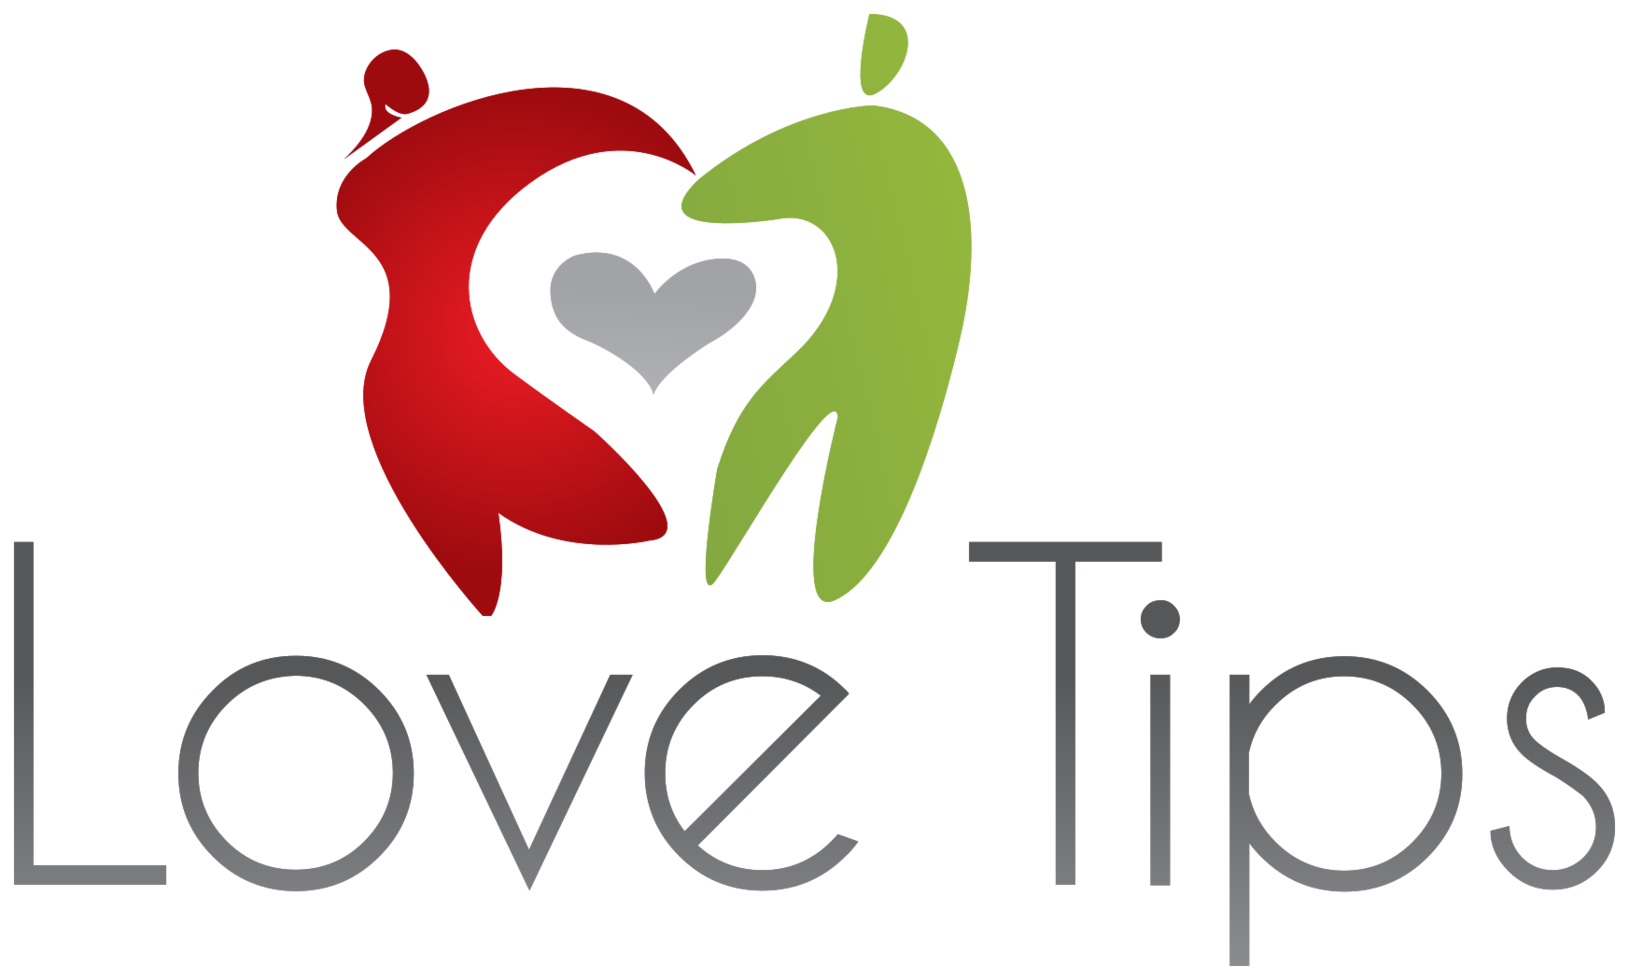 Love tips logo png